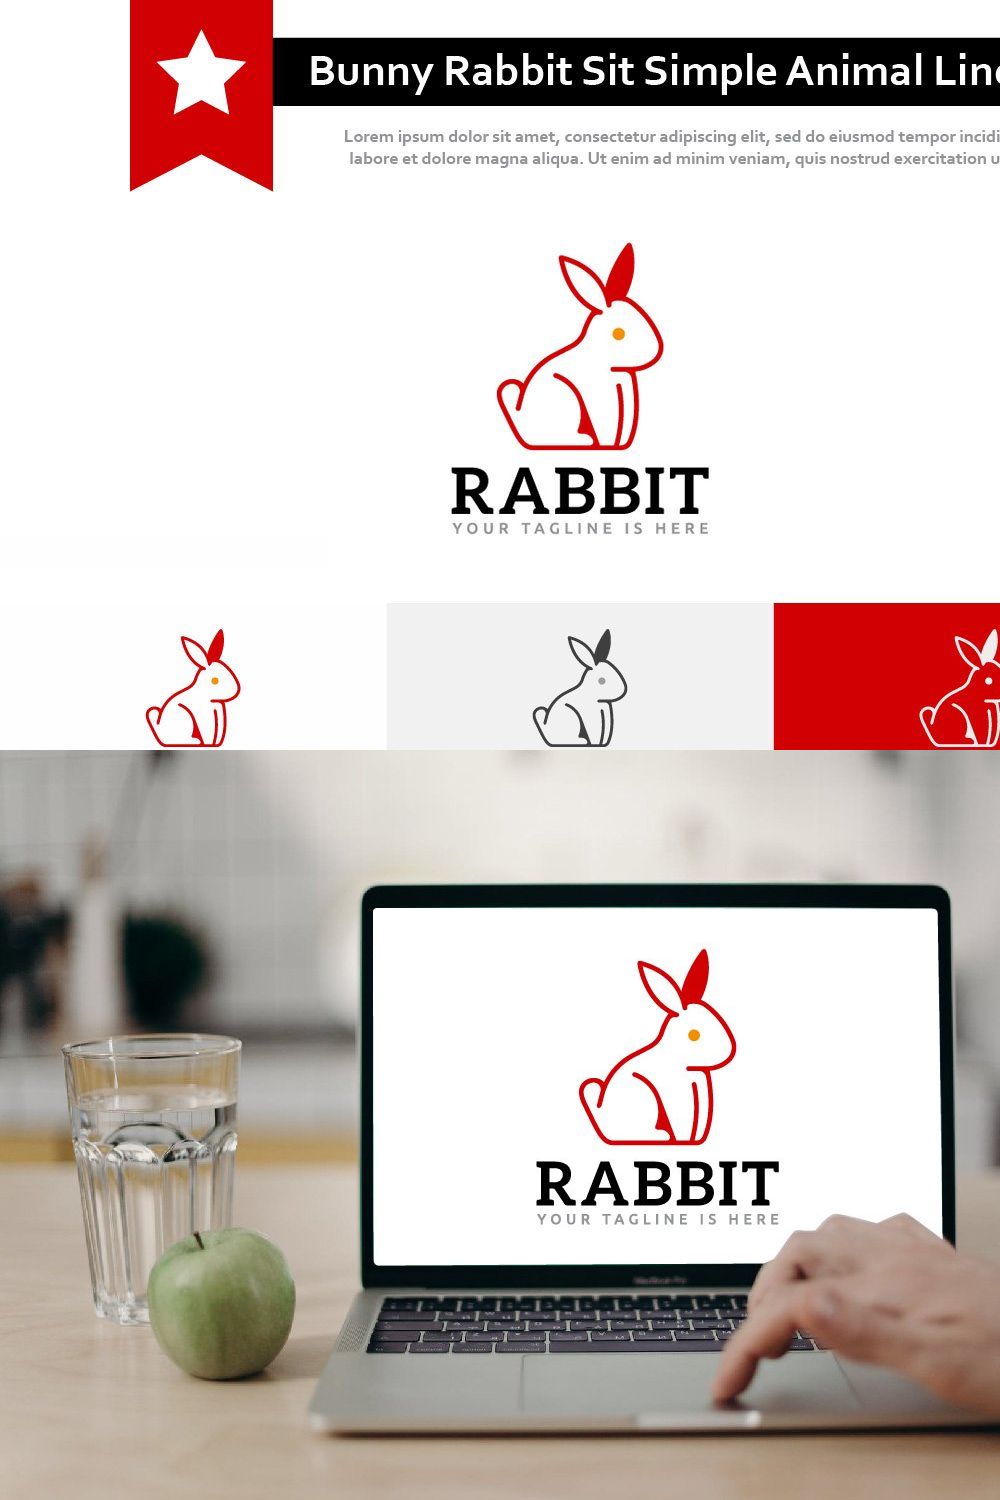 Bunny Rabbit Sit Simple Animal Logo pinterest preview image.